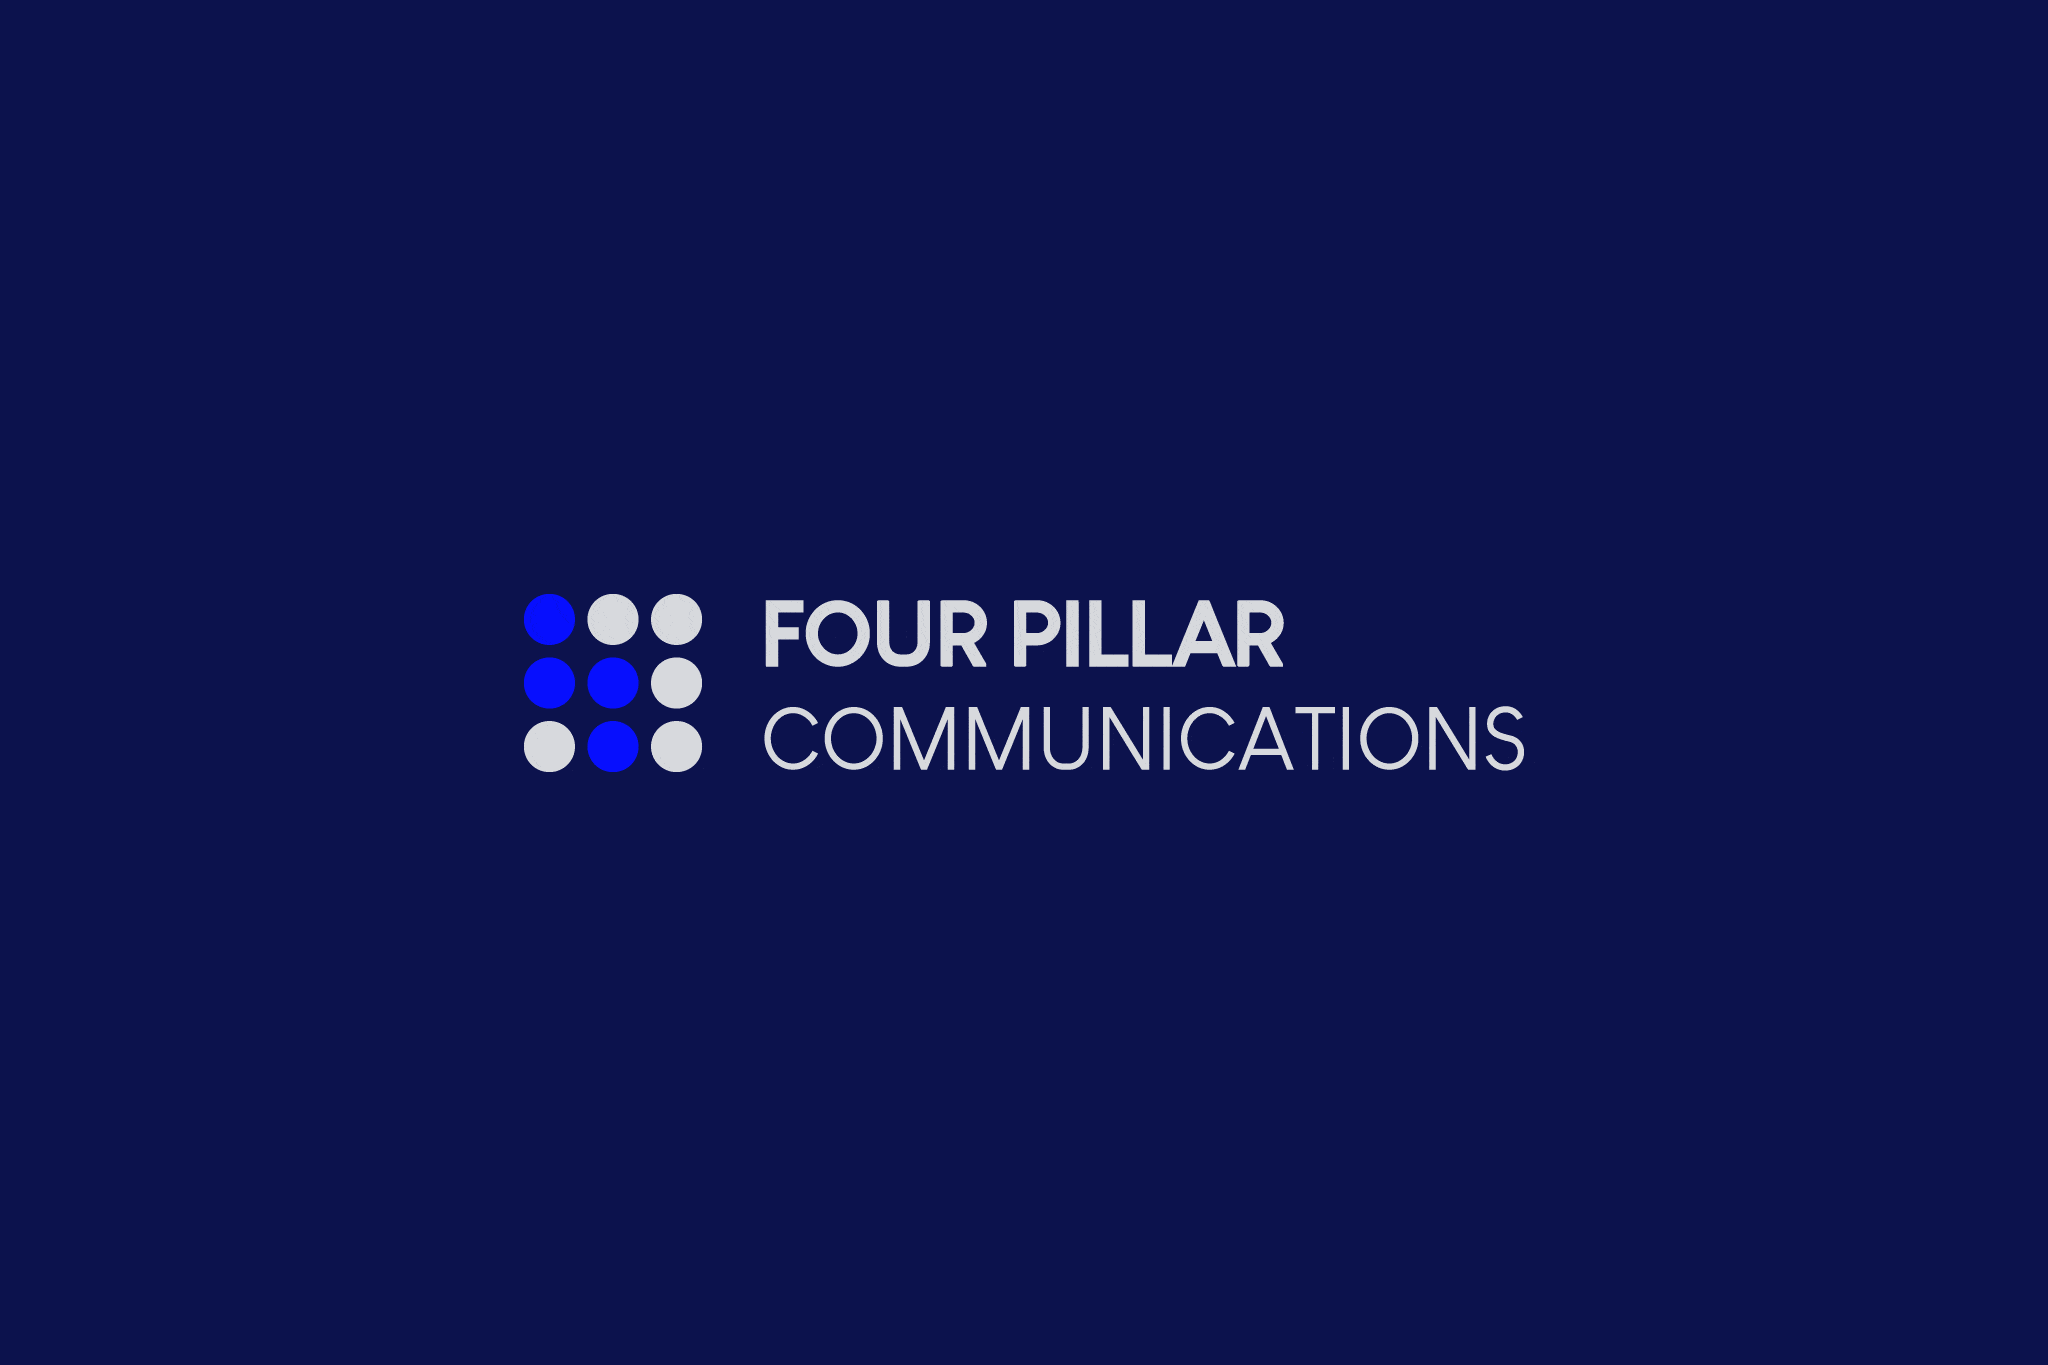 Website ux/ui for four pillar communications- misfits digital 2